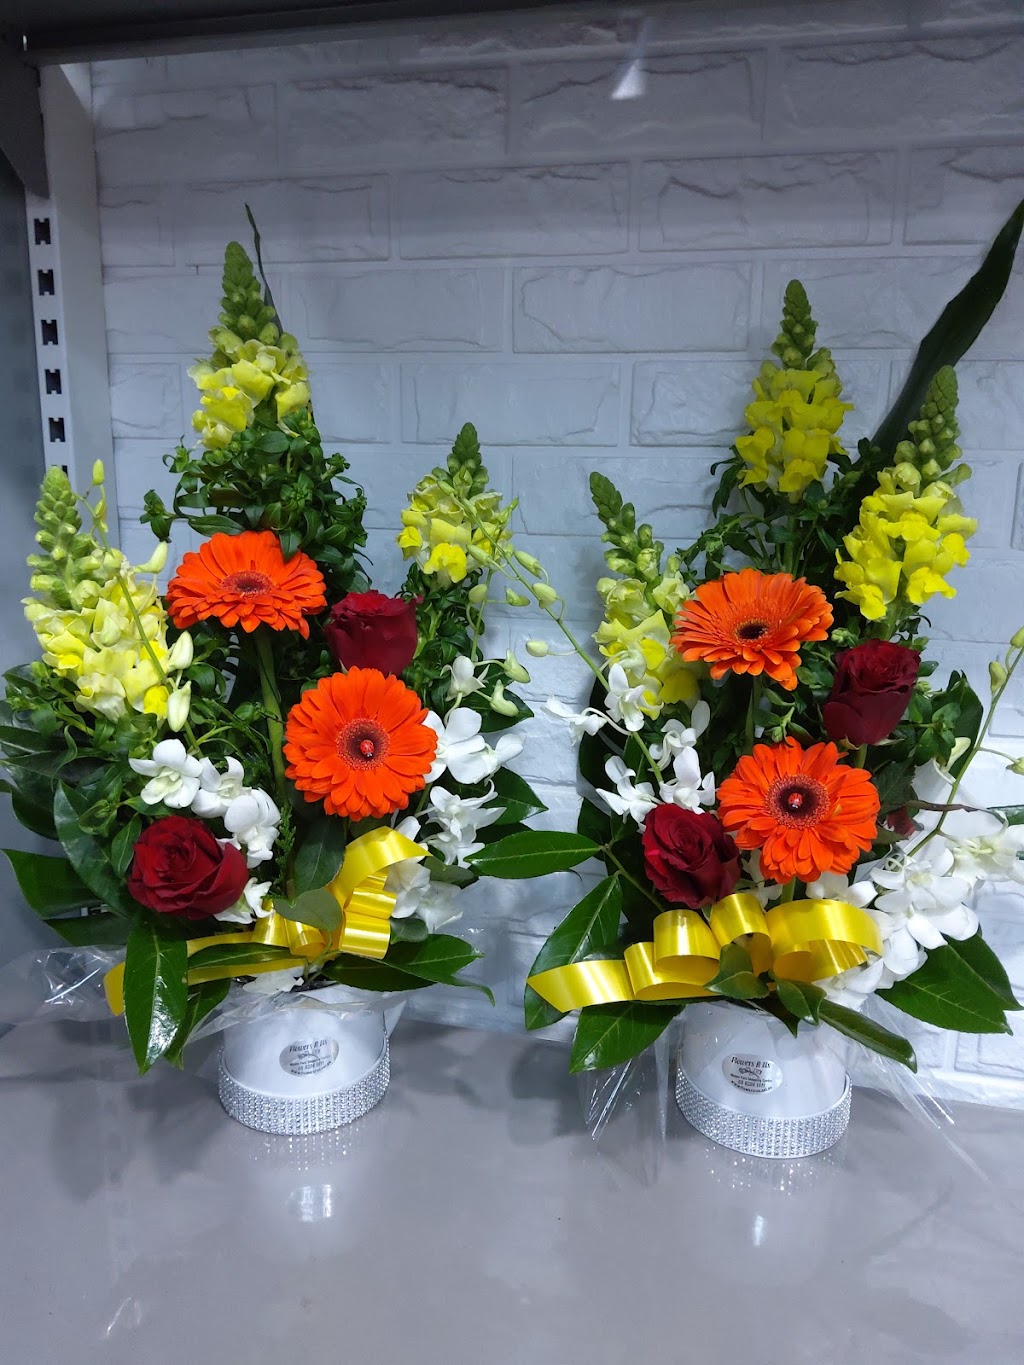 Craigmore Flowers r us | Shop 5/240 Yorktown Rd, Craigmore SA 5114, Australia | Phone: (08) 8252 5500